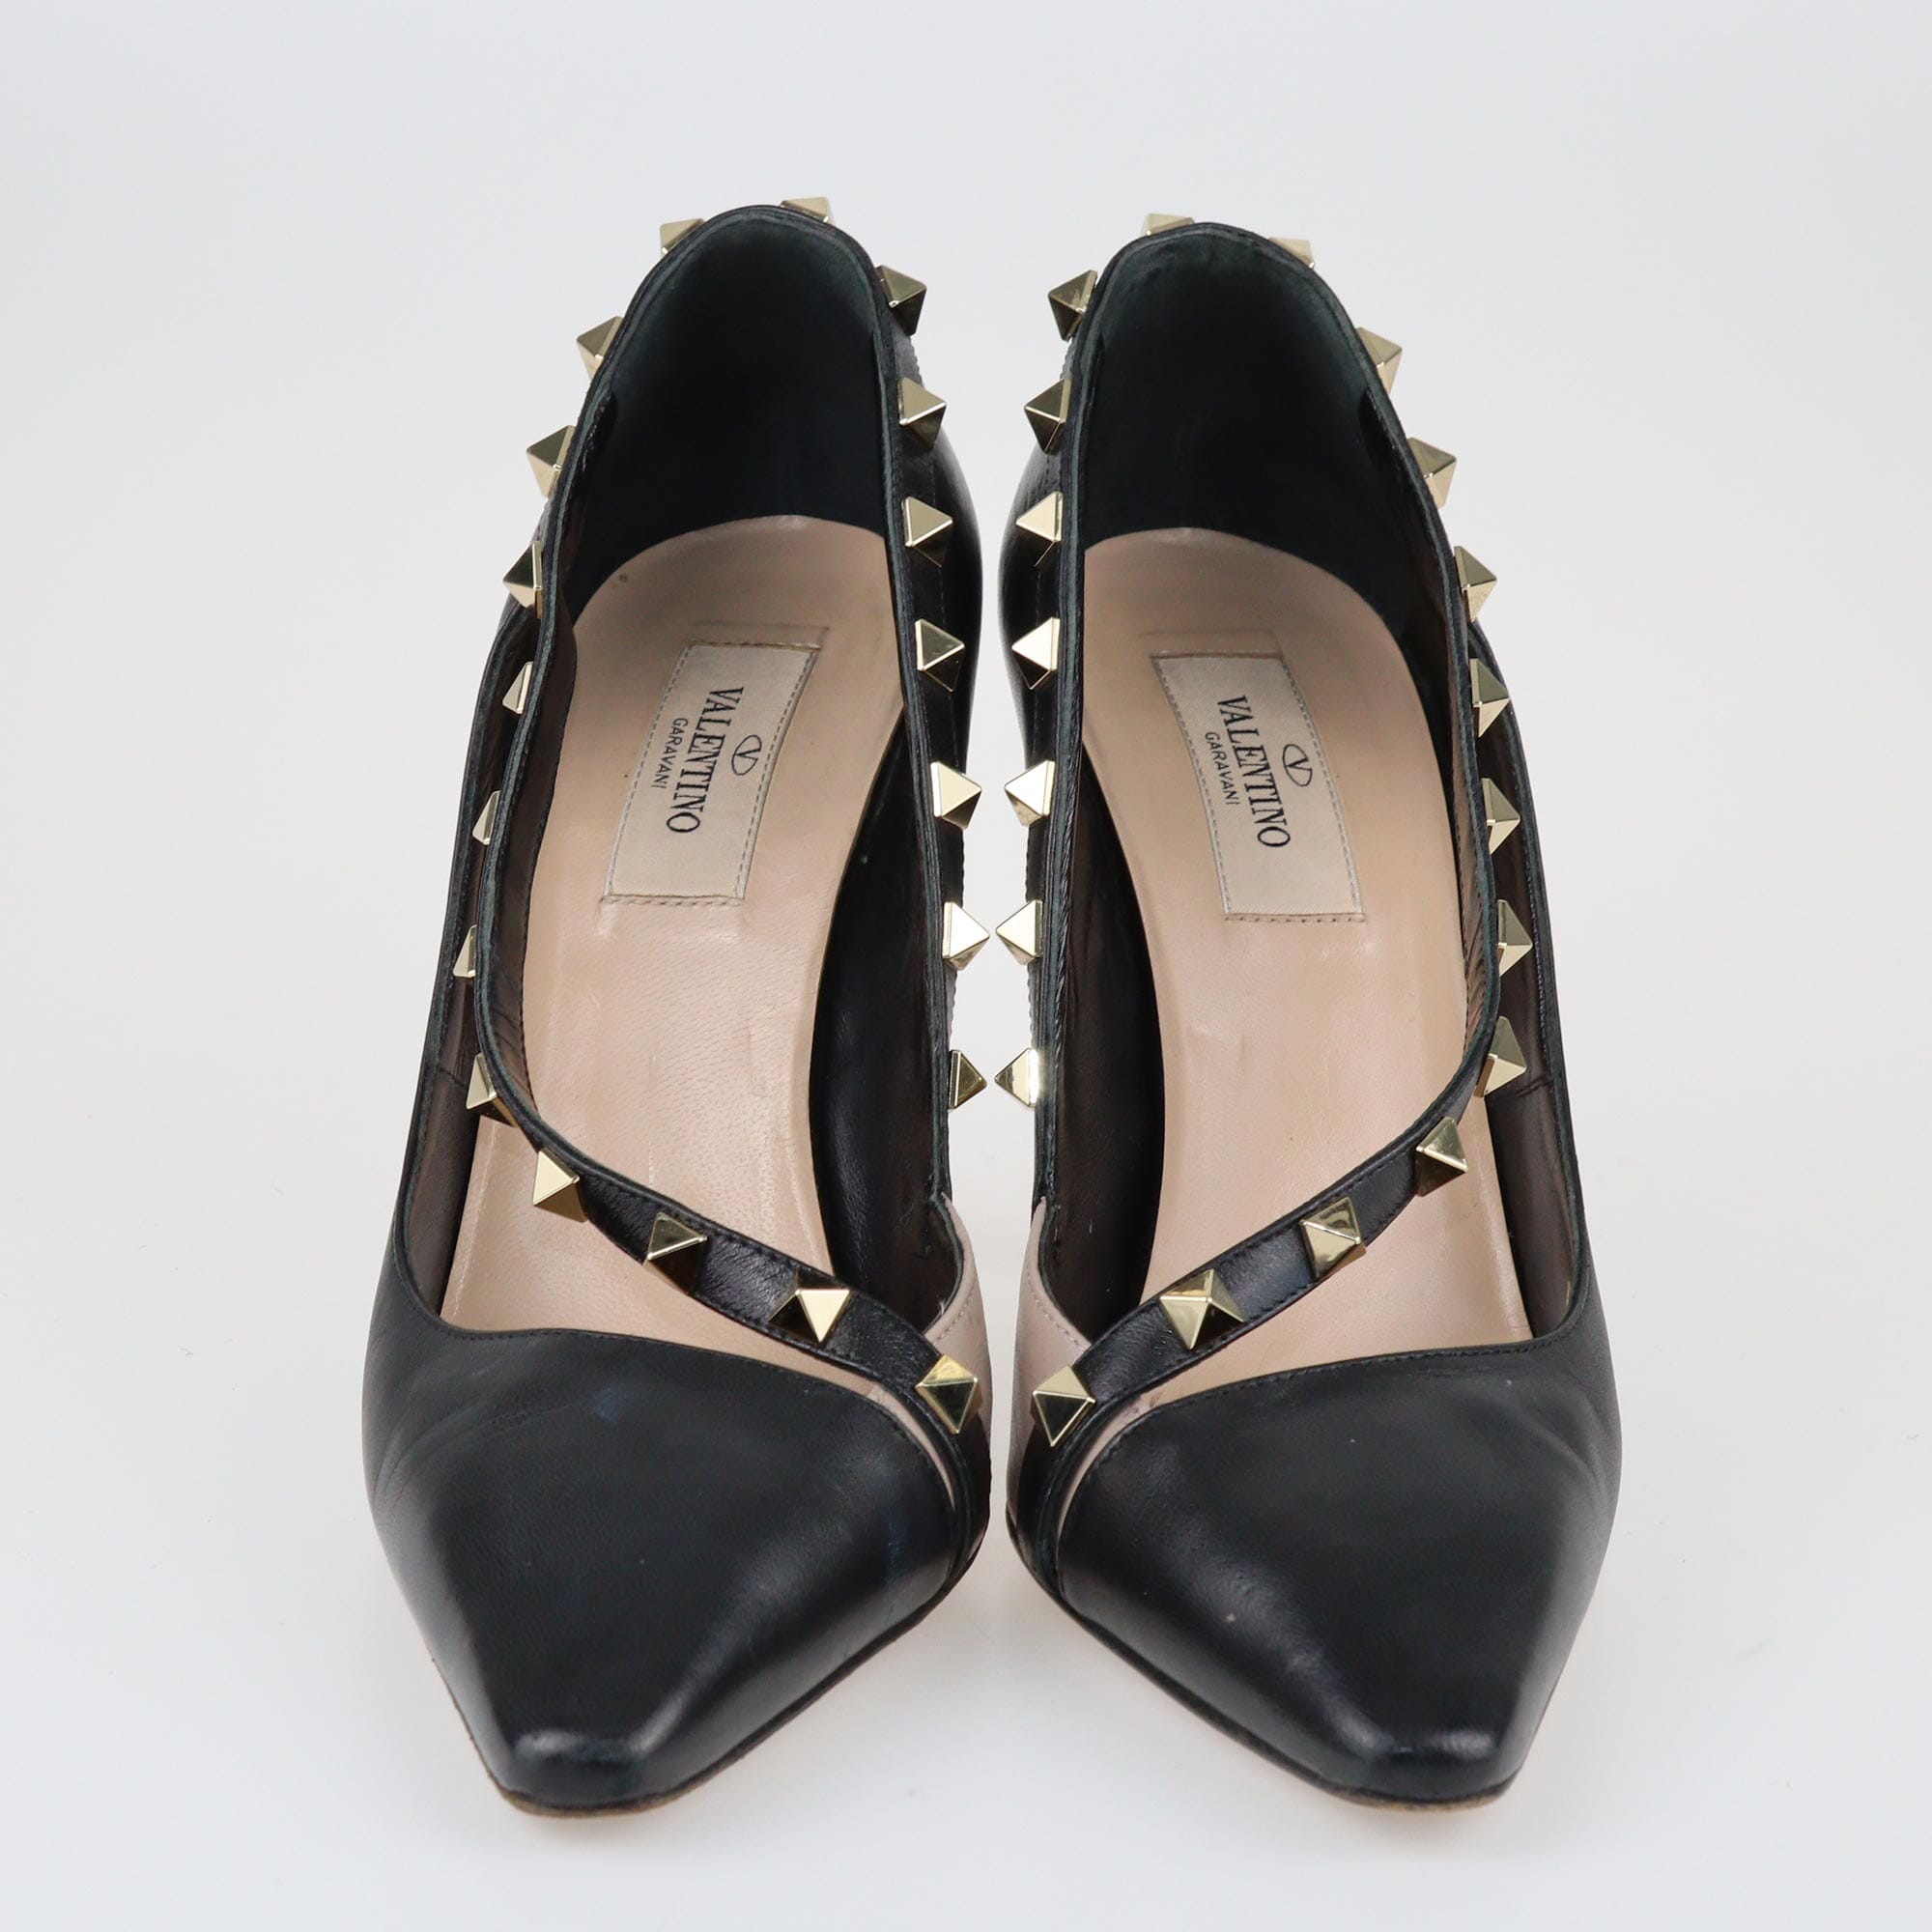 Black/Beige Rockstud Pointed Toe Pumps Shoes Valentino 